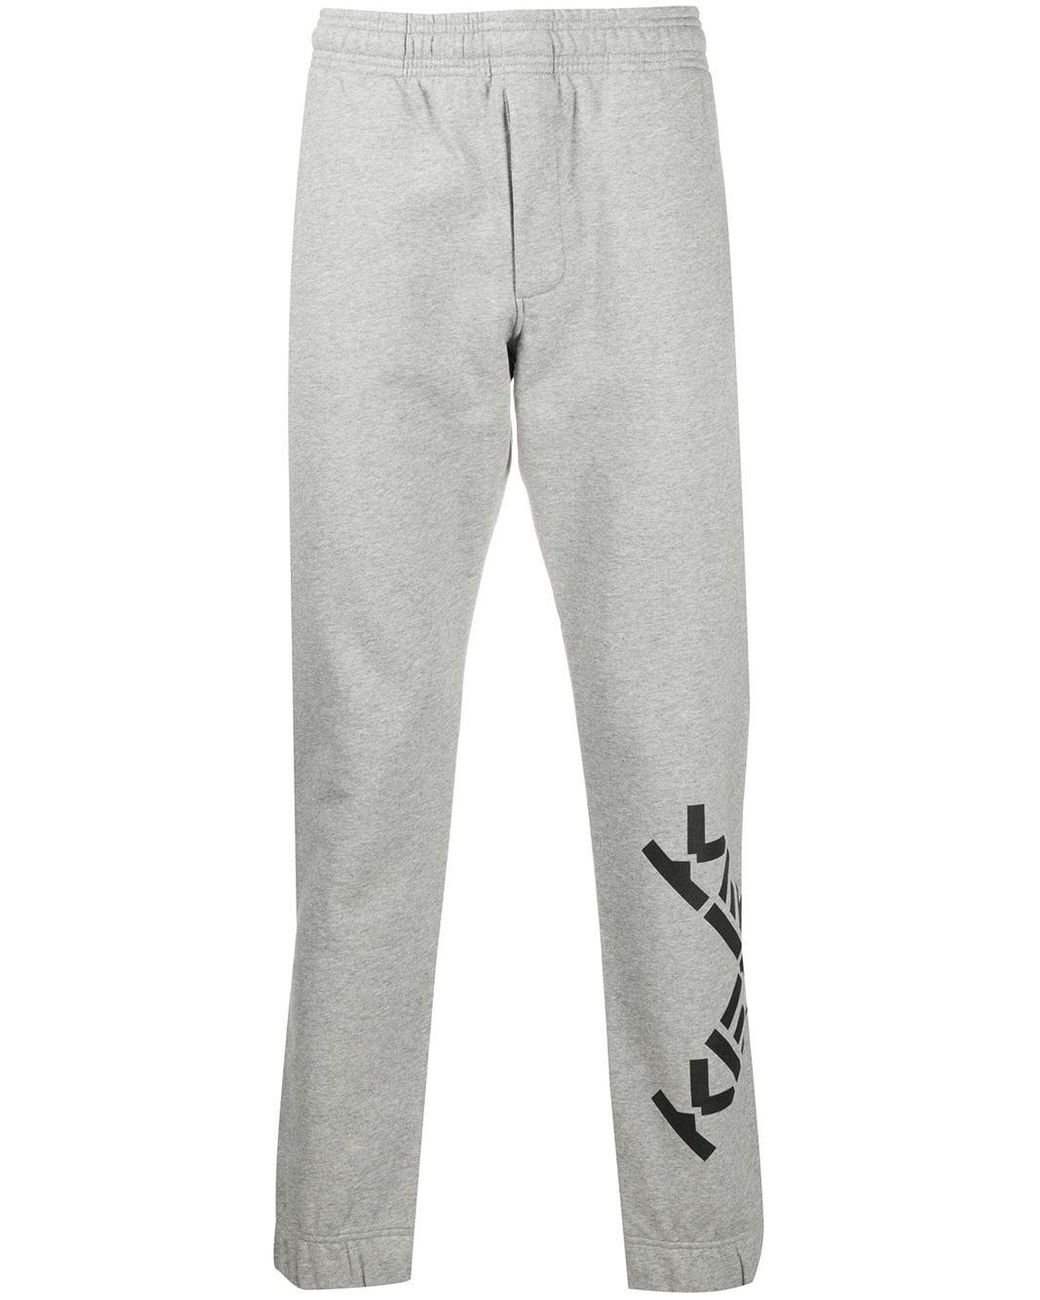 KENZO Sport Track Pants in Grey (Gray) for Men - Lyst